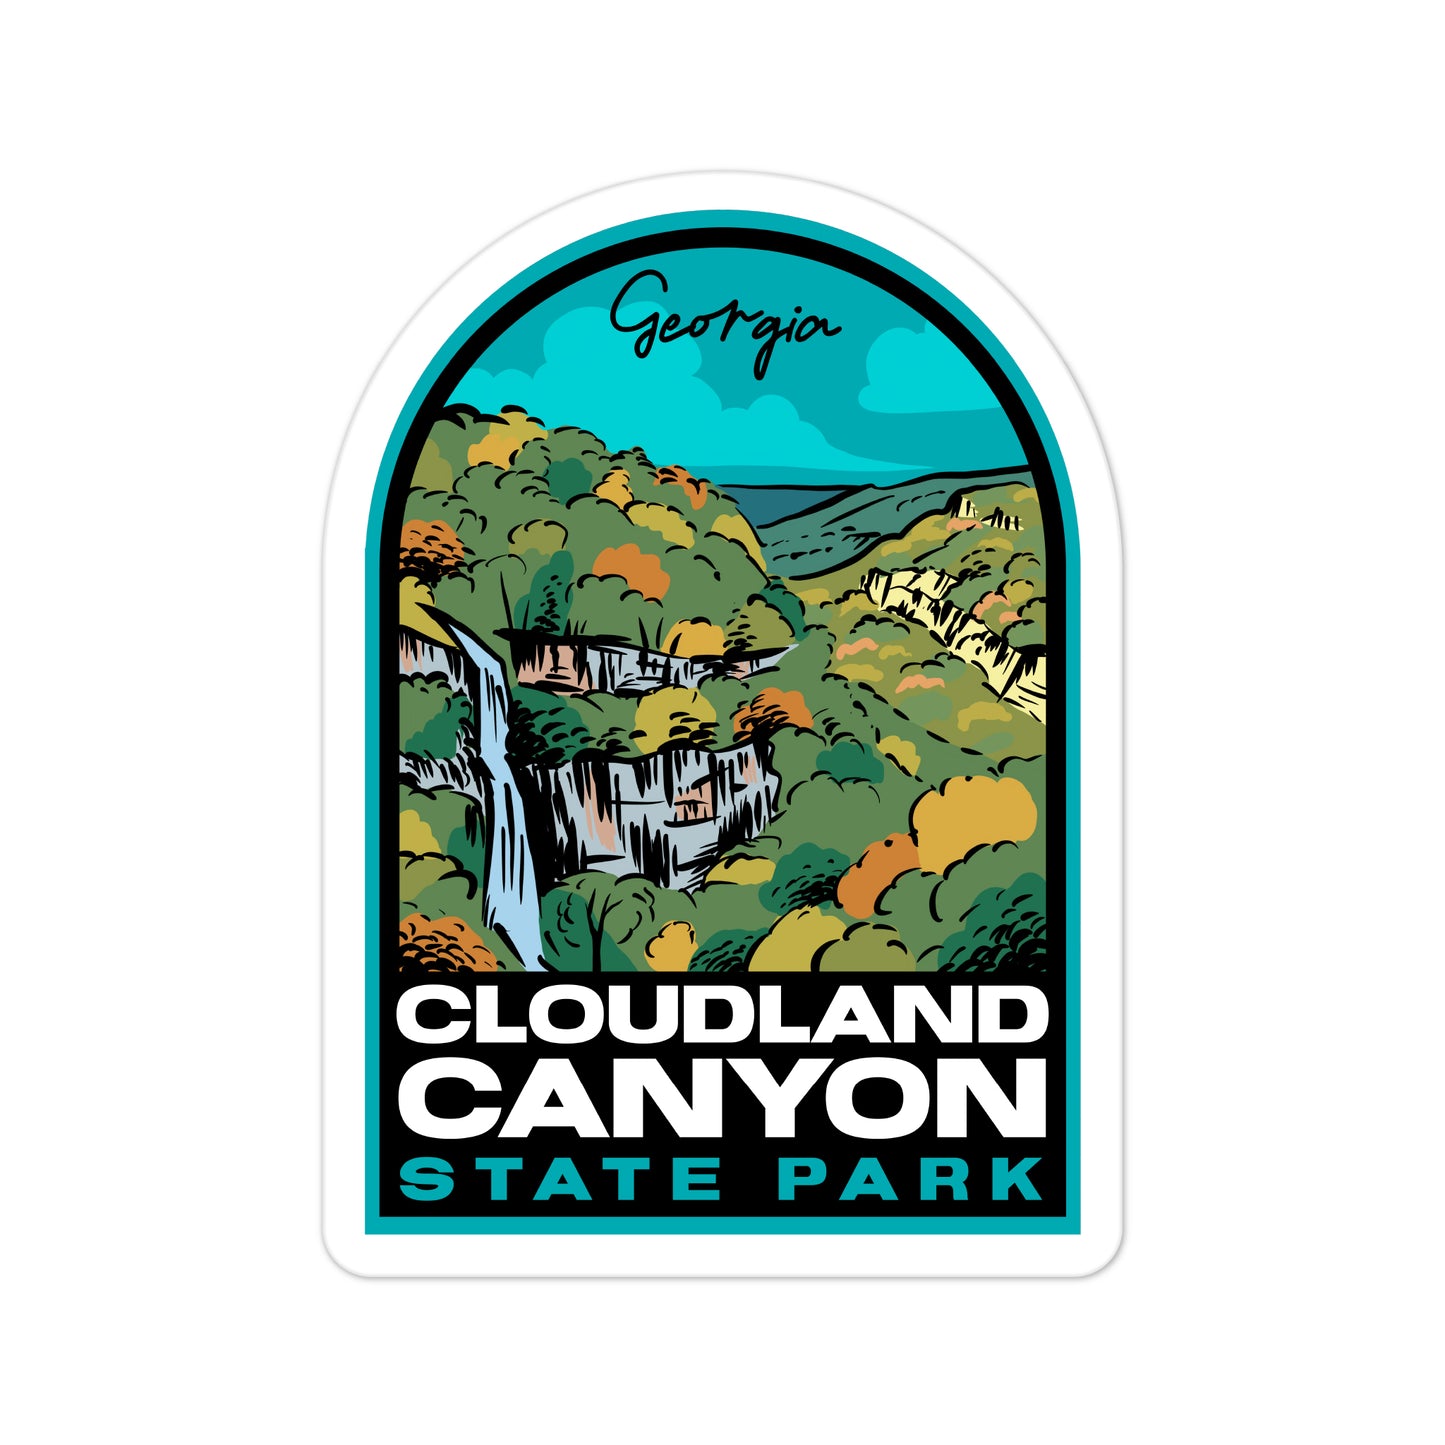 A sticker of Cloudland Canyon State Park